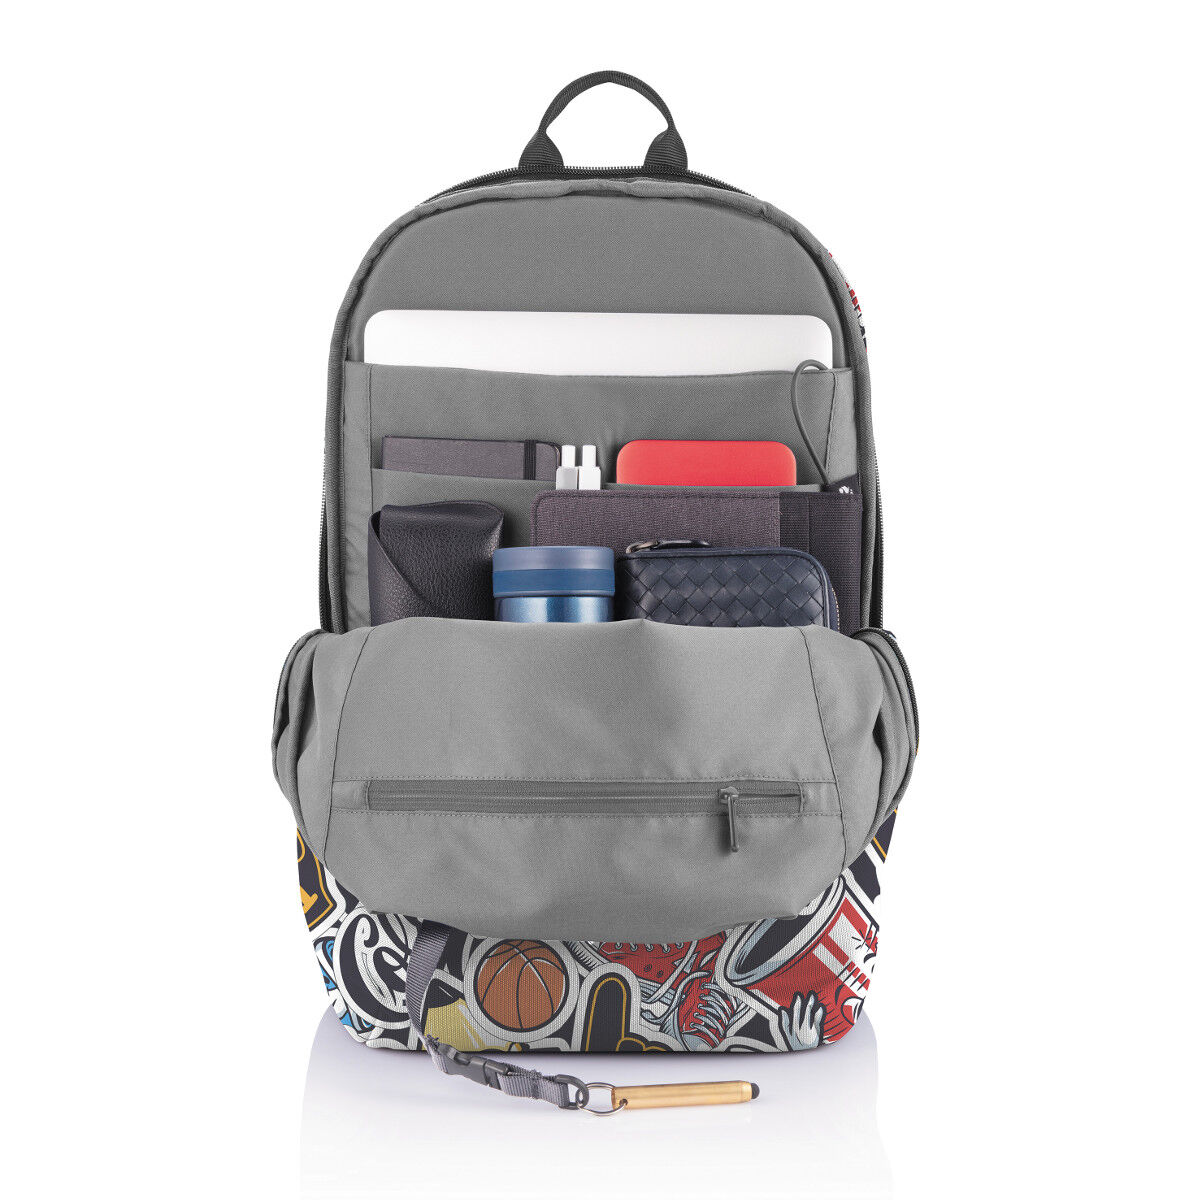 Bobby Soft ART anti-theft backpack